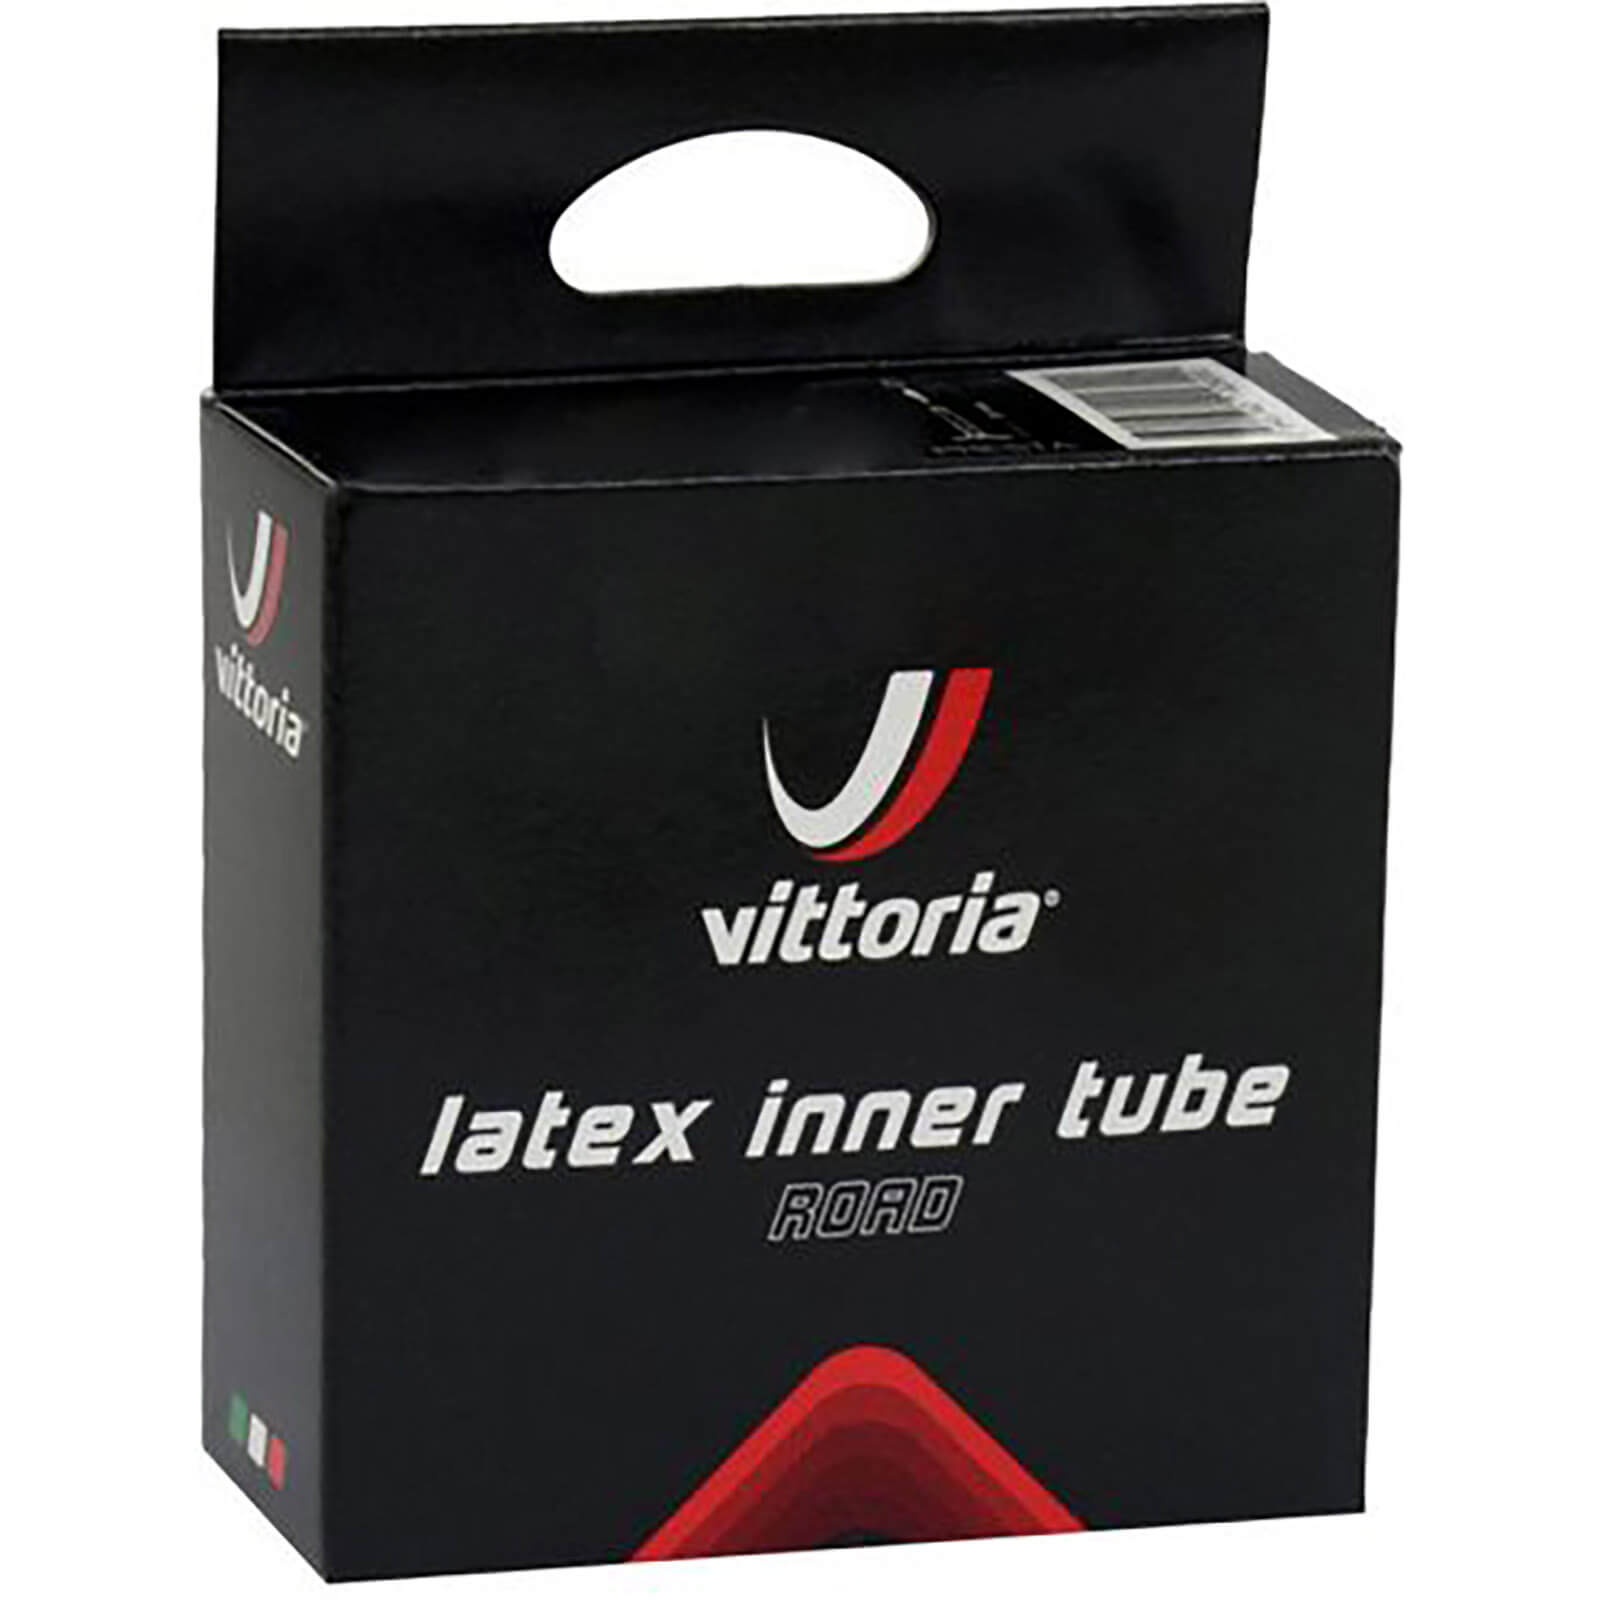 Vittoria Competition Latex Innertube - 700x30/38mm